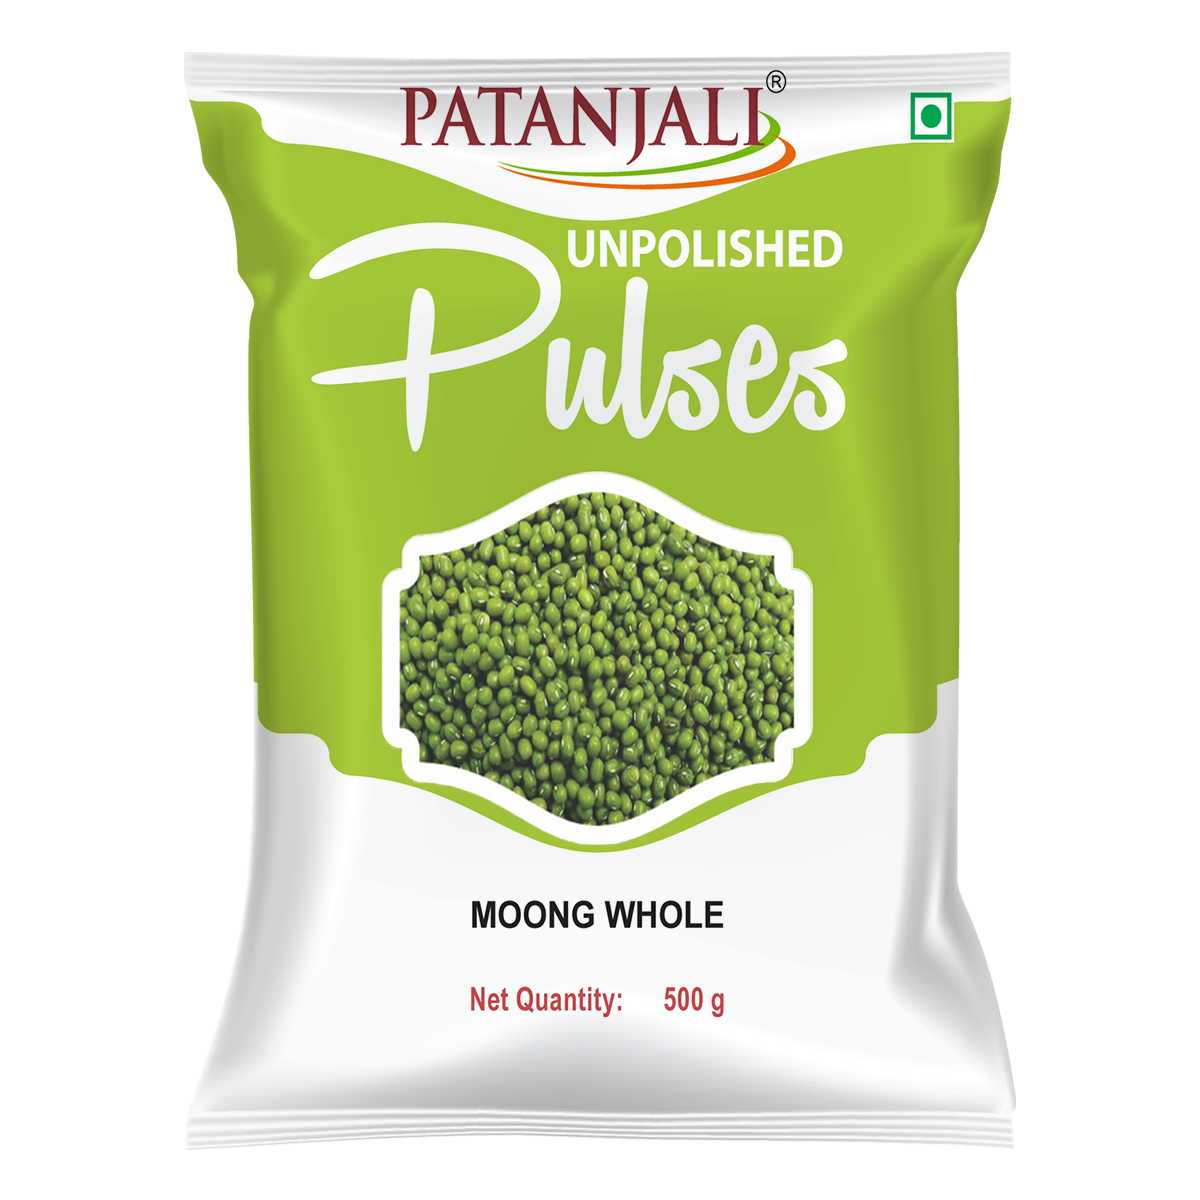 Patanjali/ Unpolished Pulses/ Moong Whole(500gm)